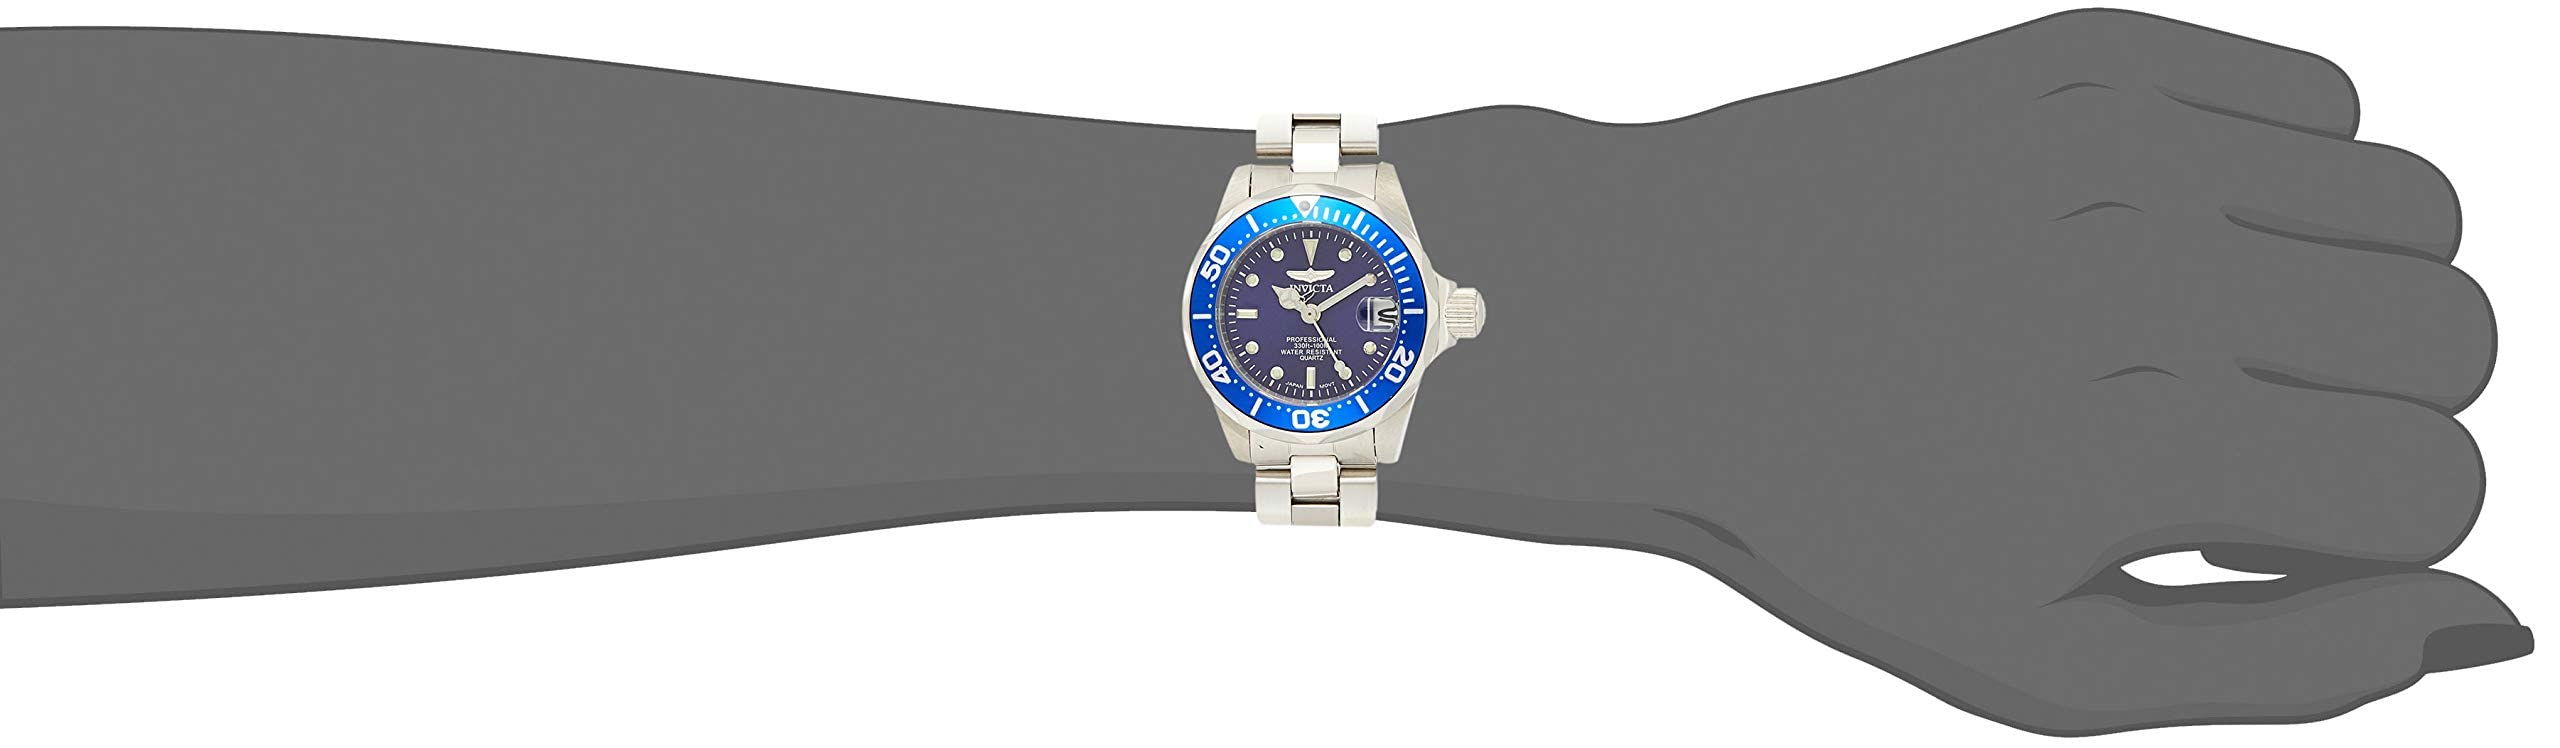 Invicta Women's 9177 Pro Diver Collection Silver-Tone Watch